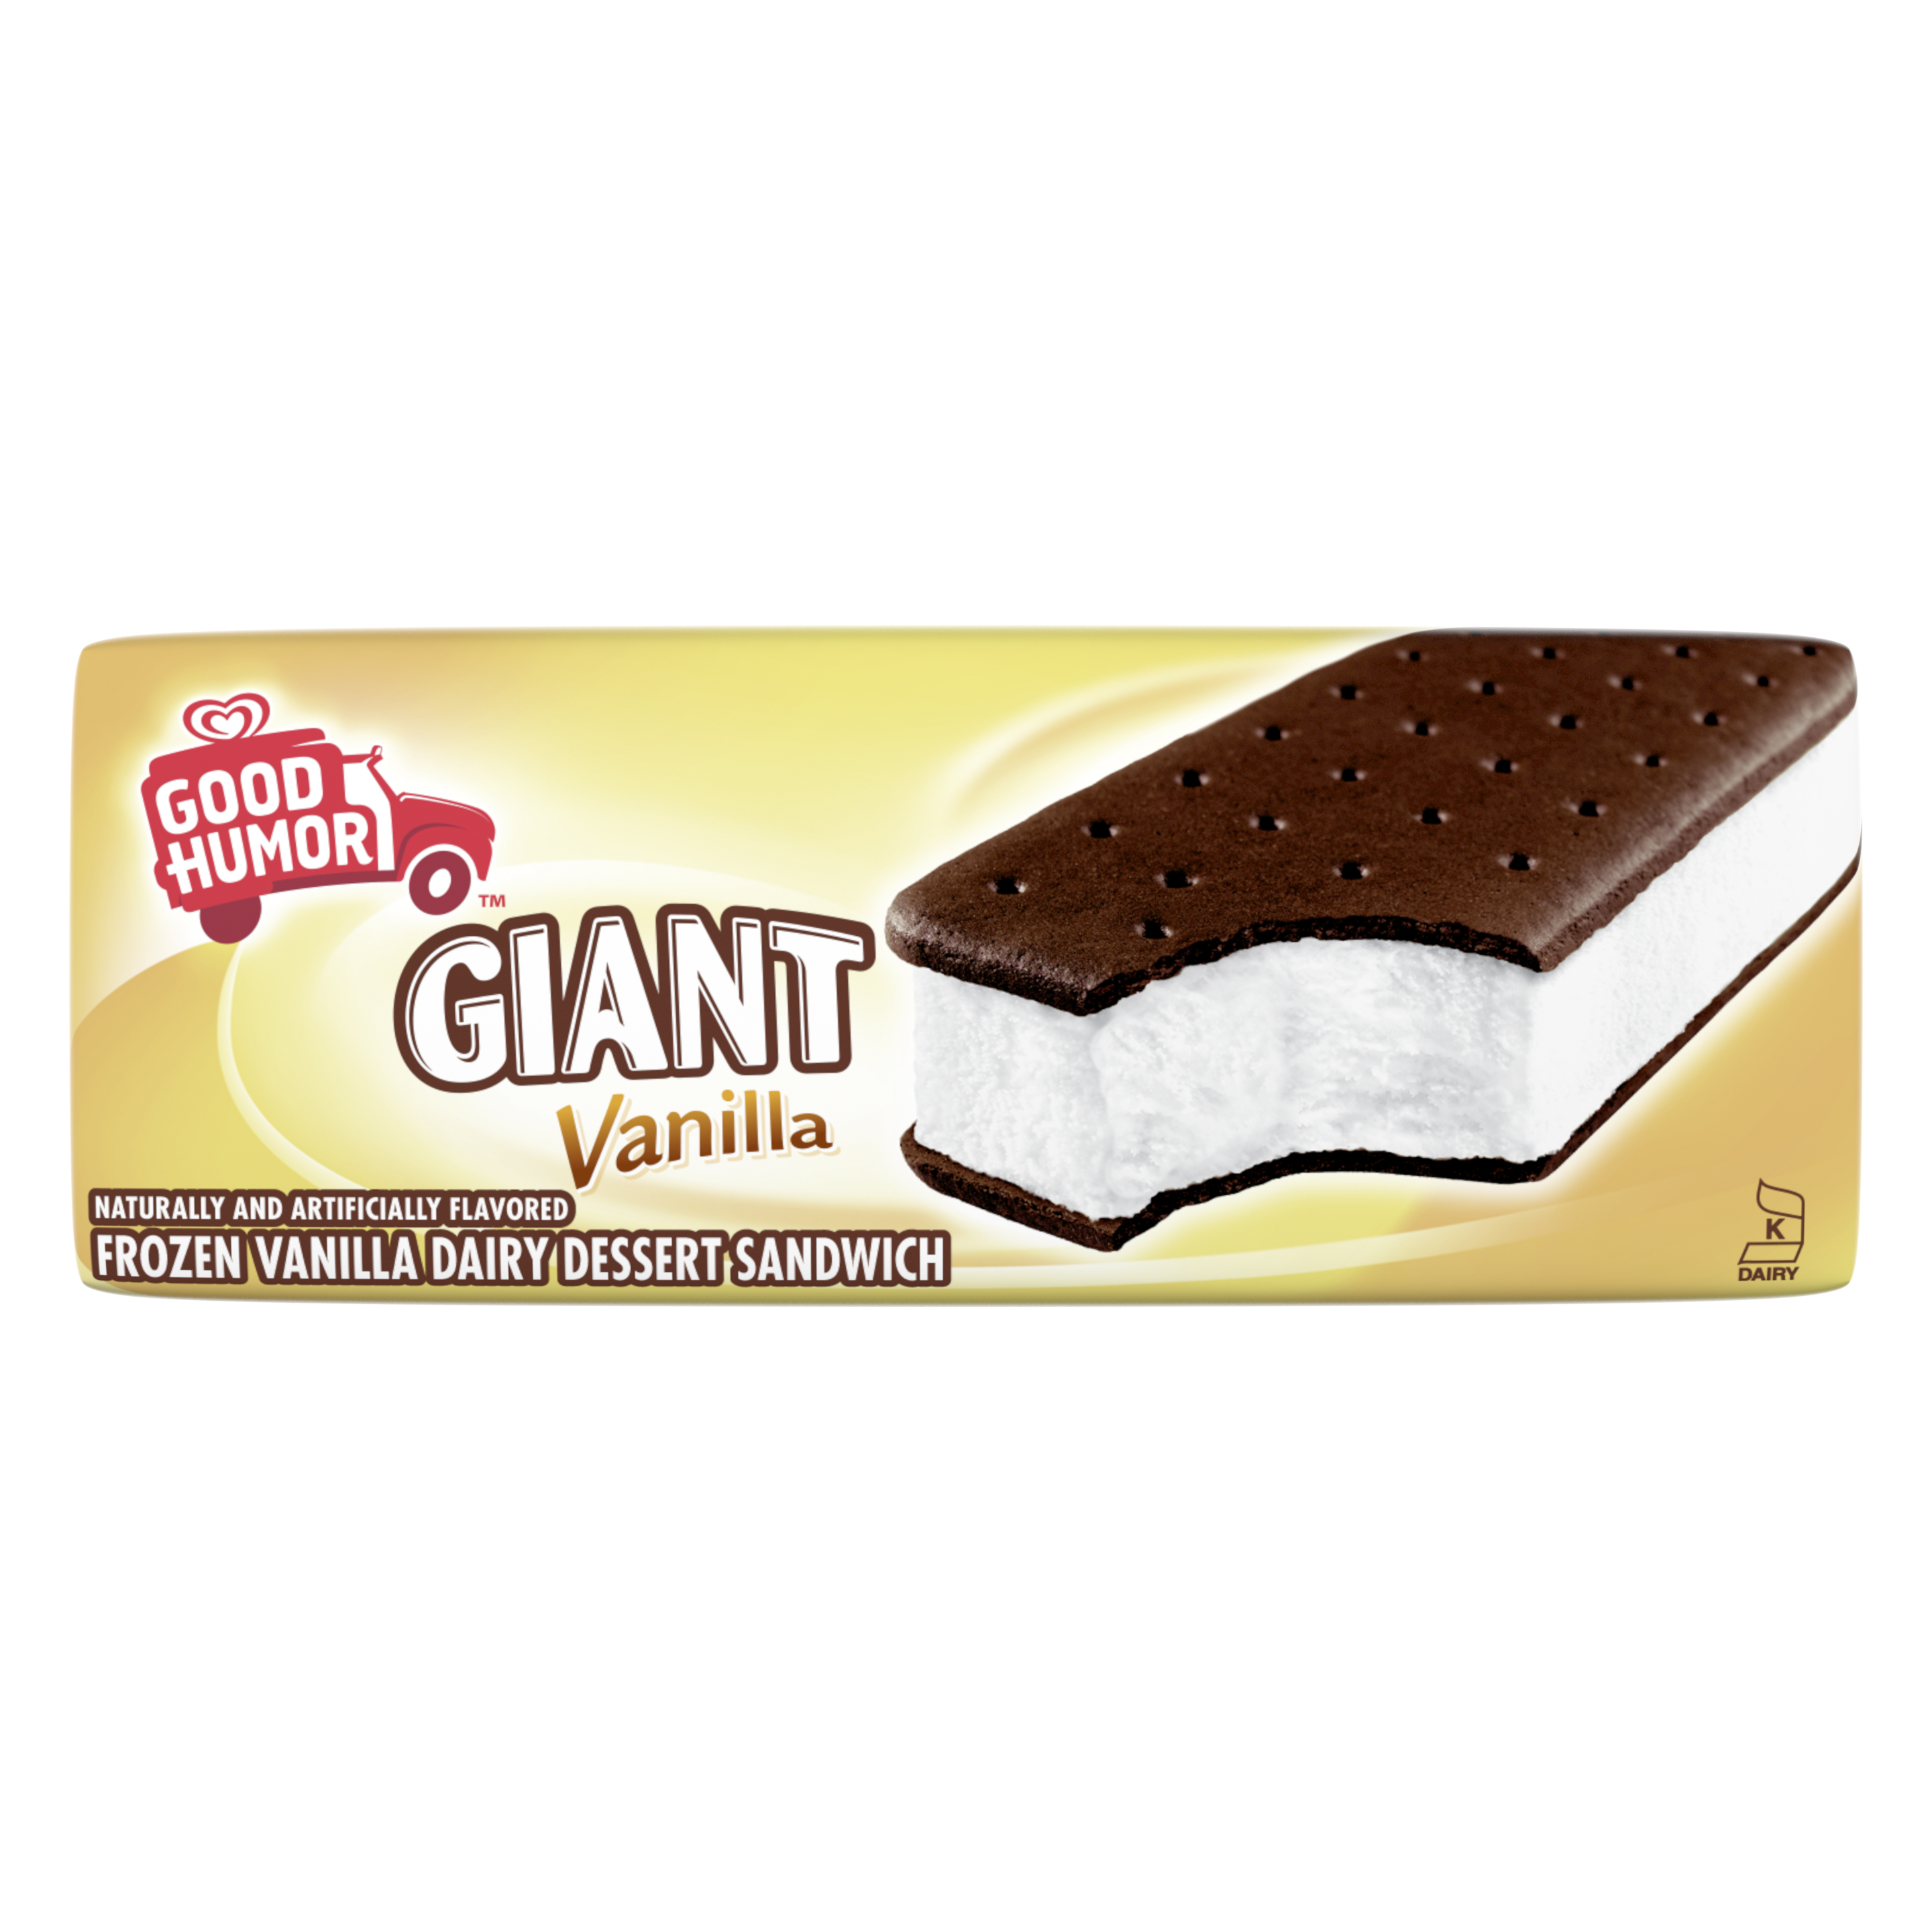 Giant Vanilla Sandwich